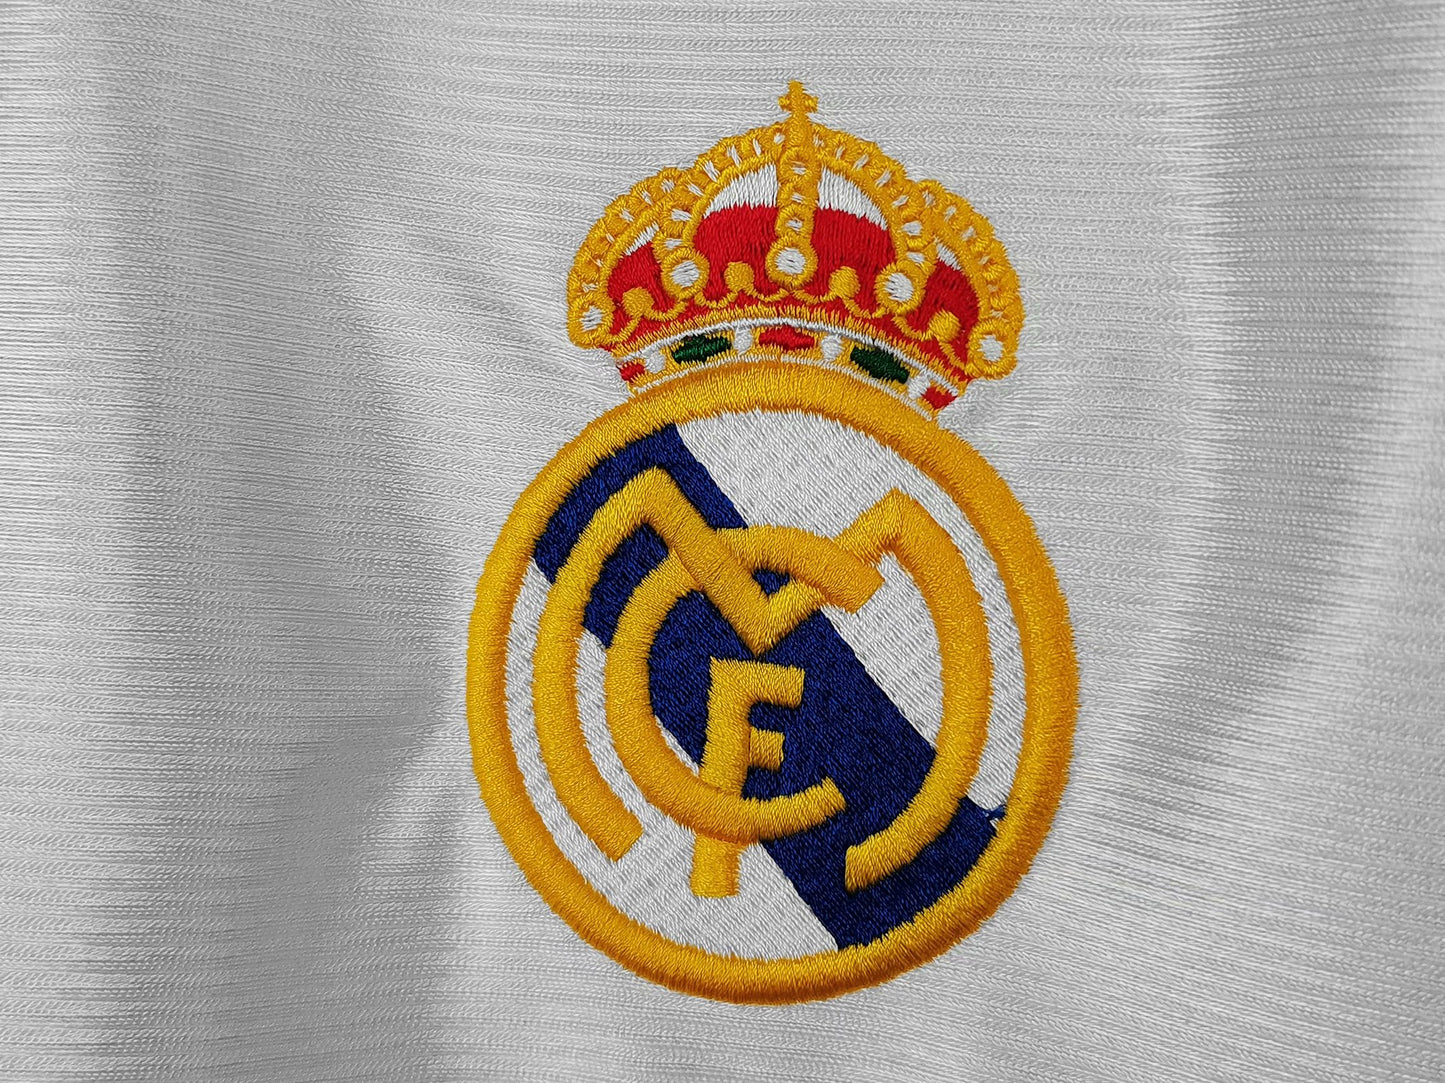 Real Madrid 98-00 Home Shirt